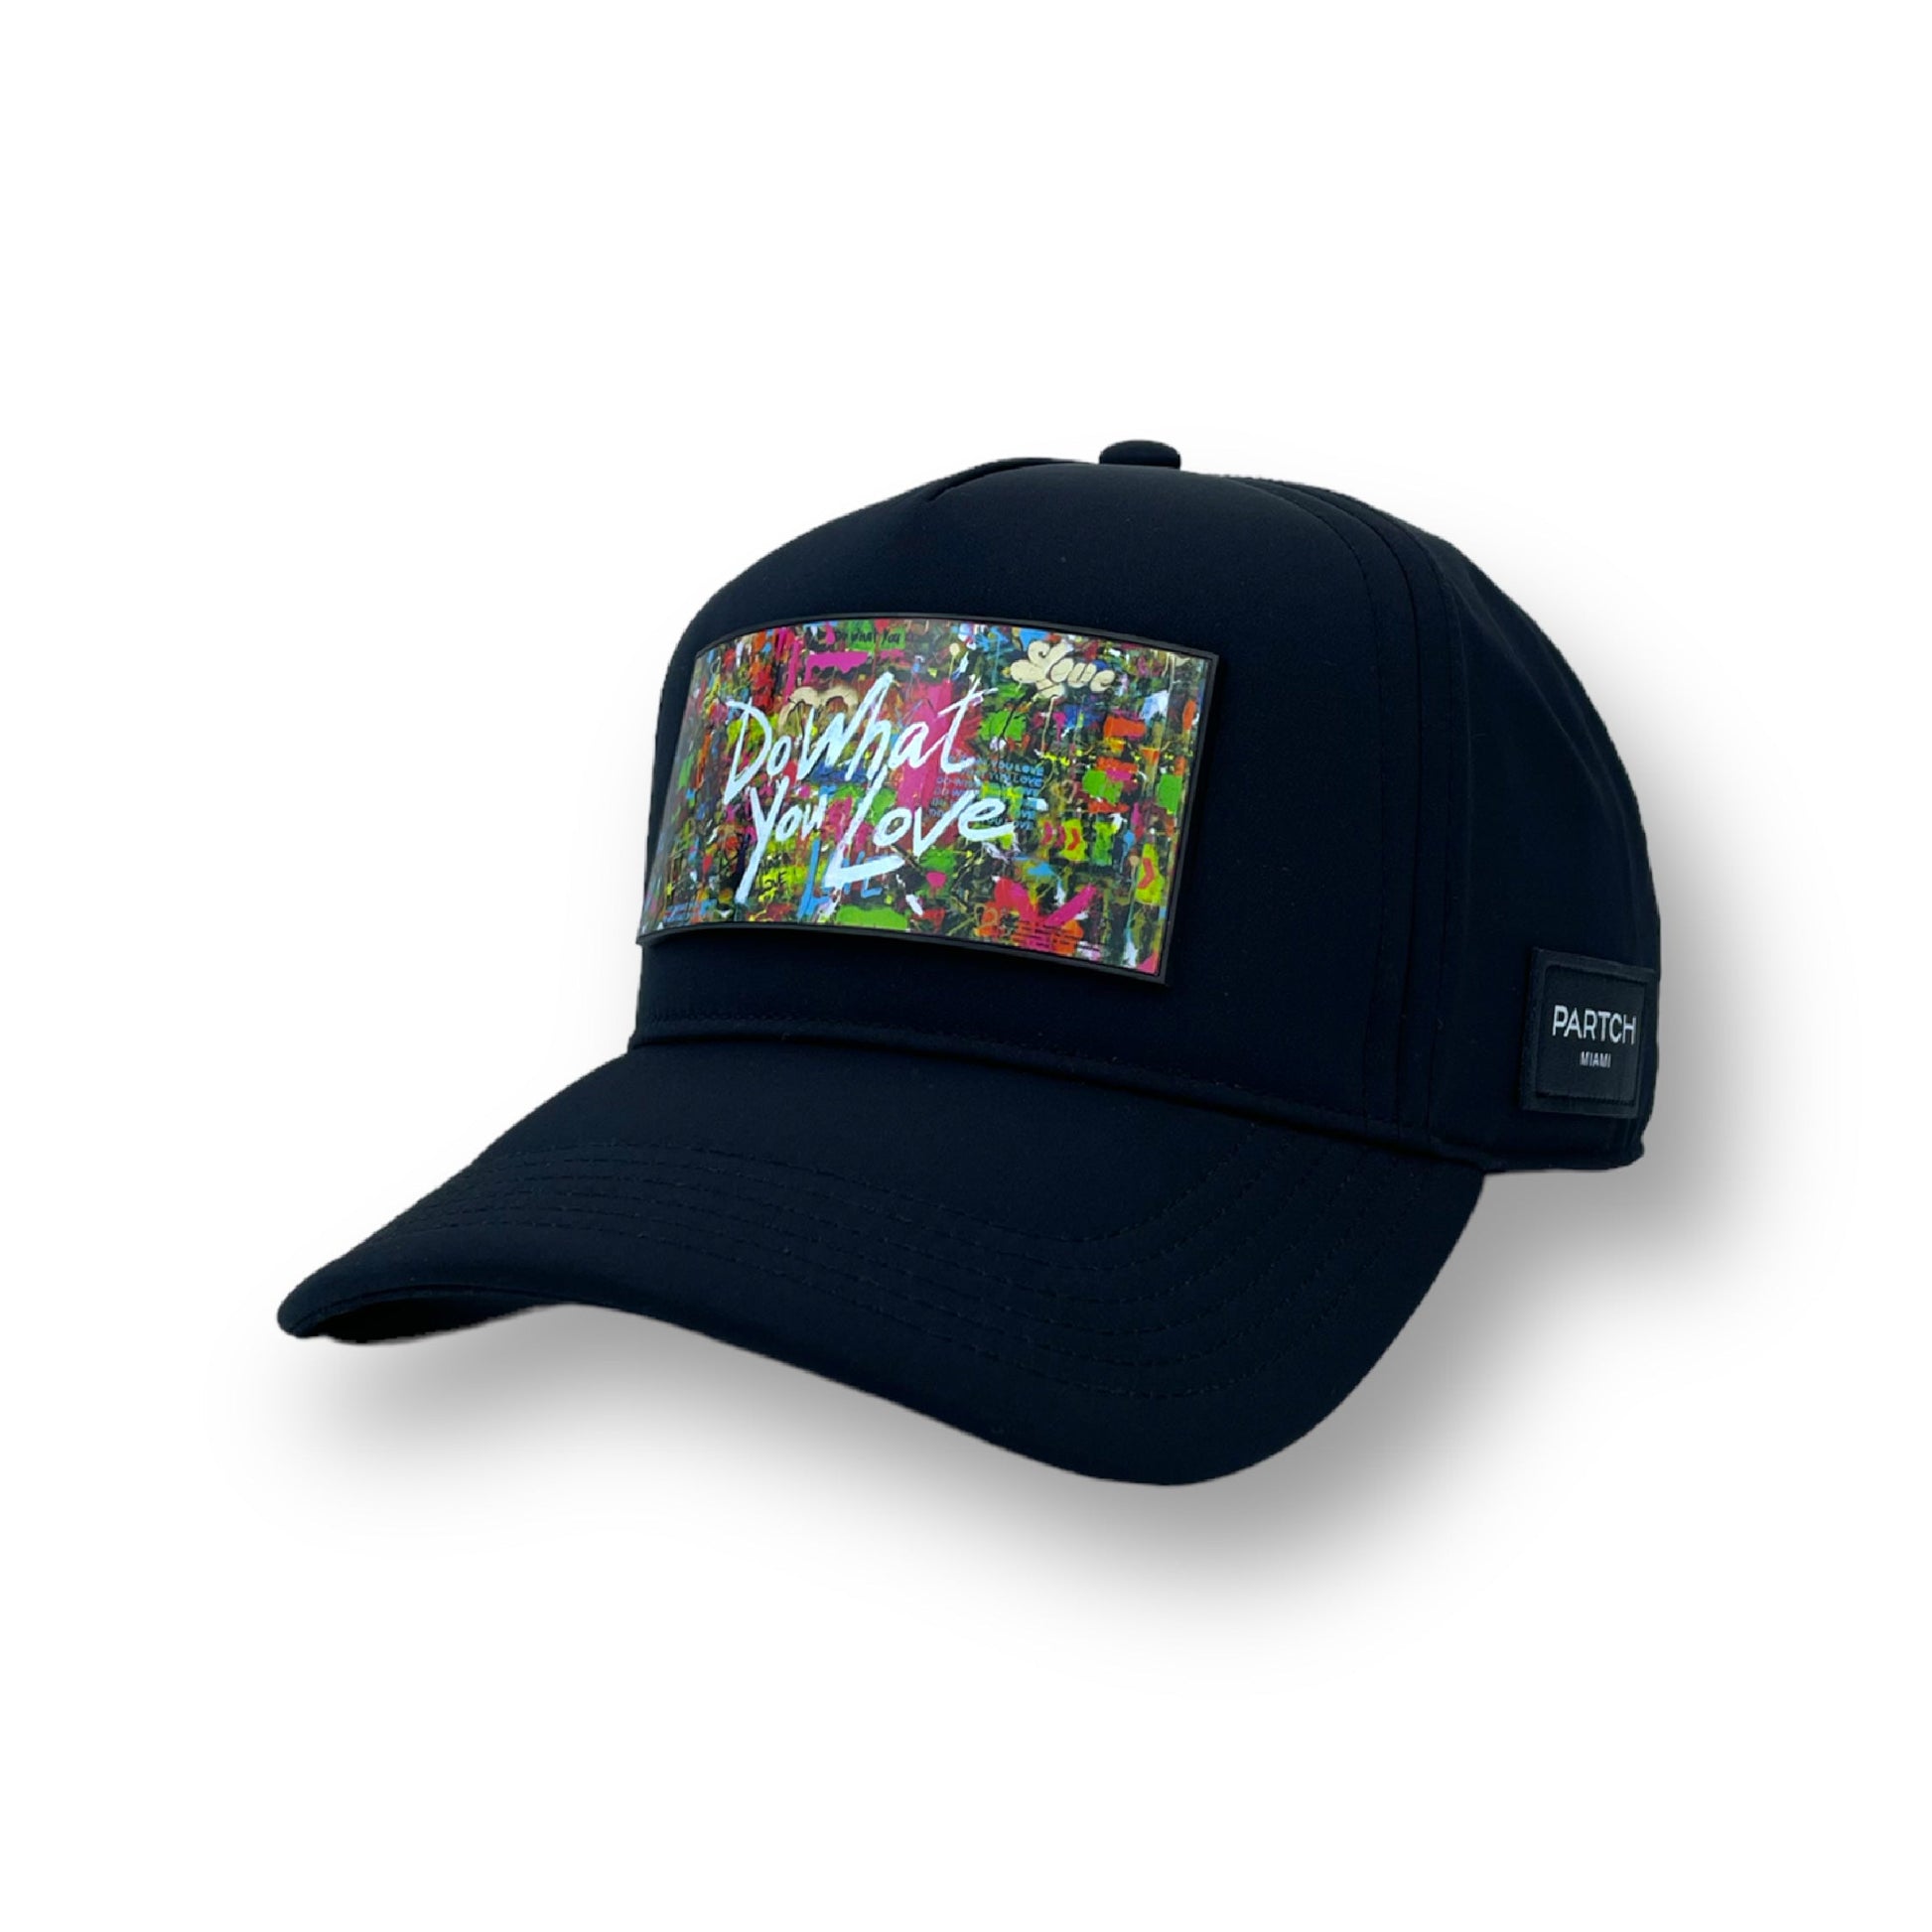 Black Luxury Fashion trucker Hat Partch Do What Love Art PARTCH-clip Removable front Patches